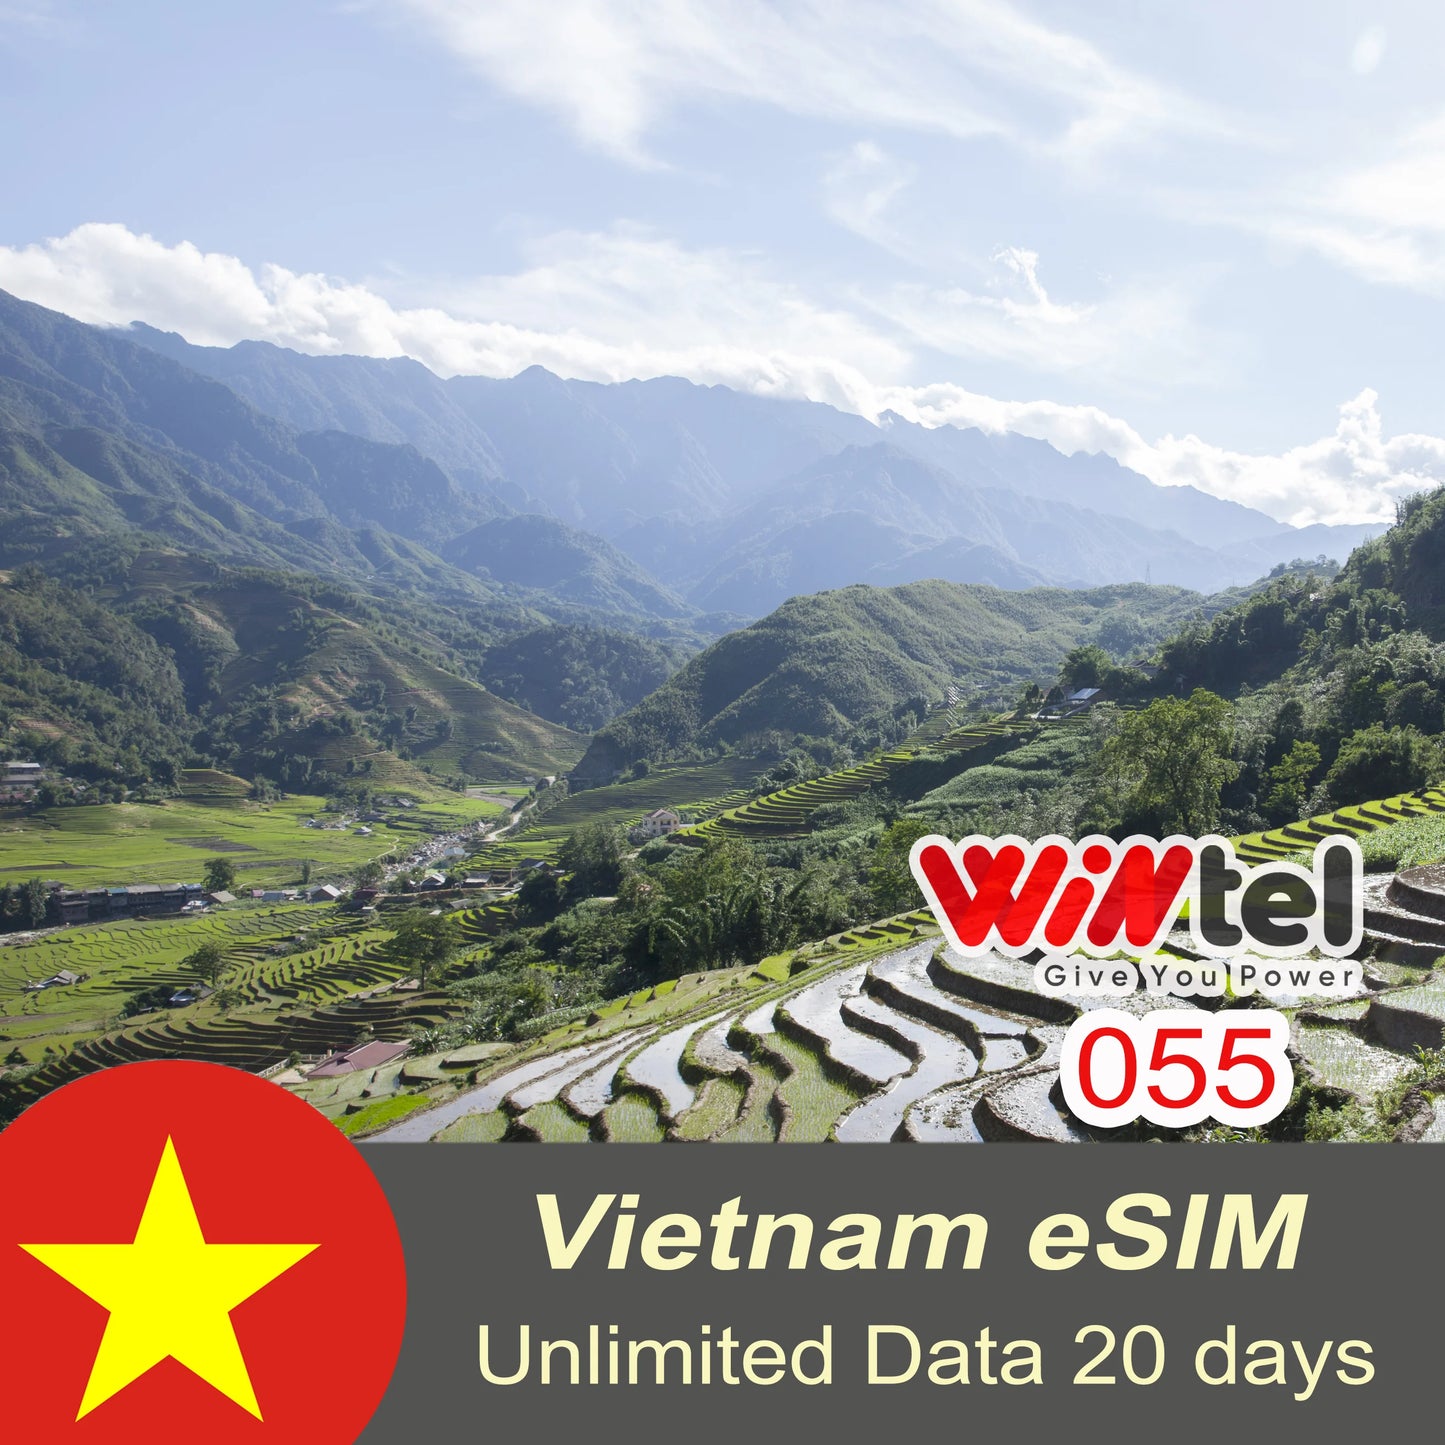 Vietnam eSIM Unlimited Data for 20 days